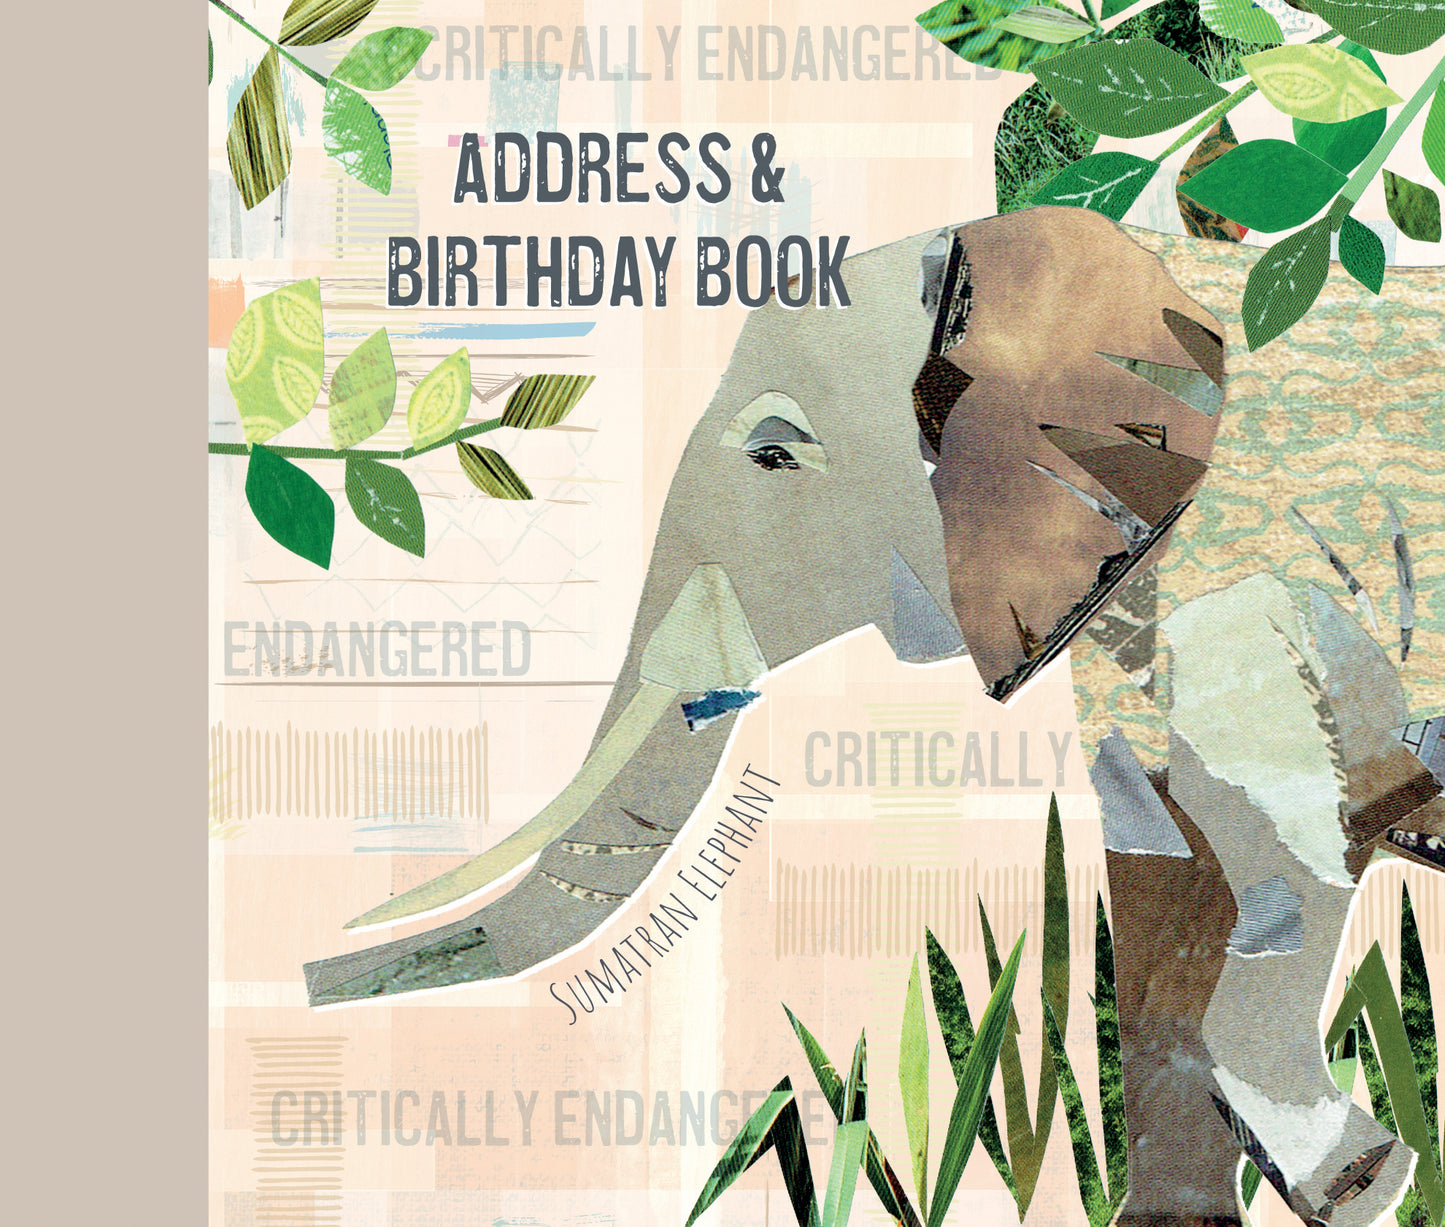 Address & Birthday Book - Endangered